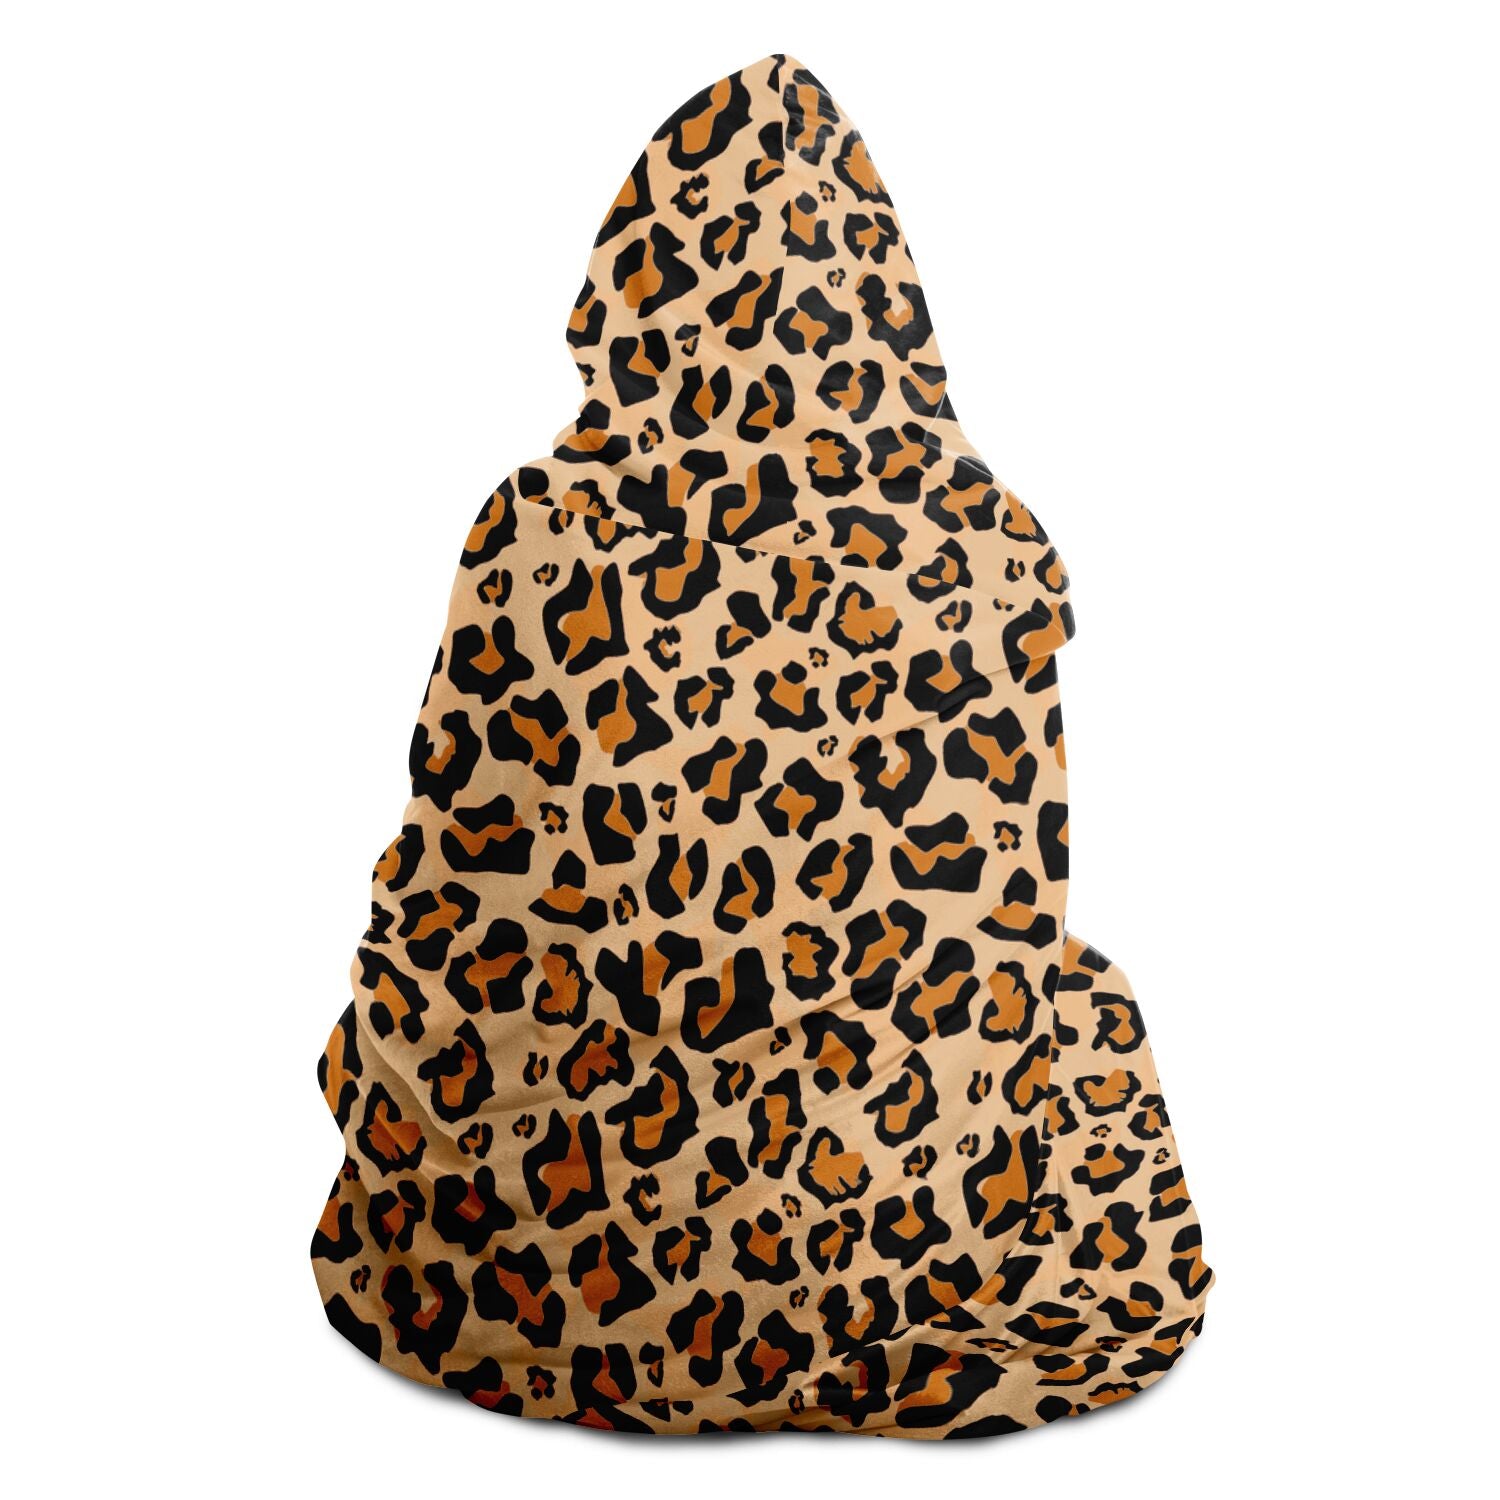 Leopard Hooded Blanket, Animal Print Cheetah Sherpa Fleece Soft Fluffy Cozy Warm Adult Men Women Kids Large Gift Starcove Fashion